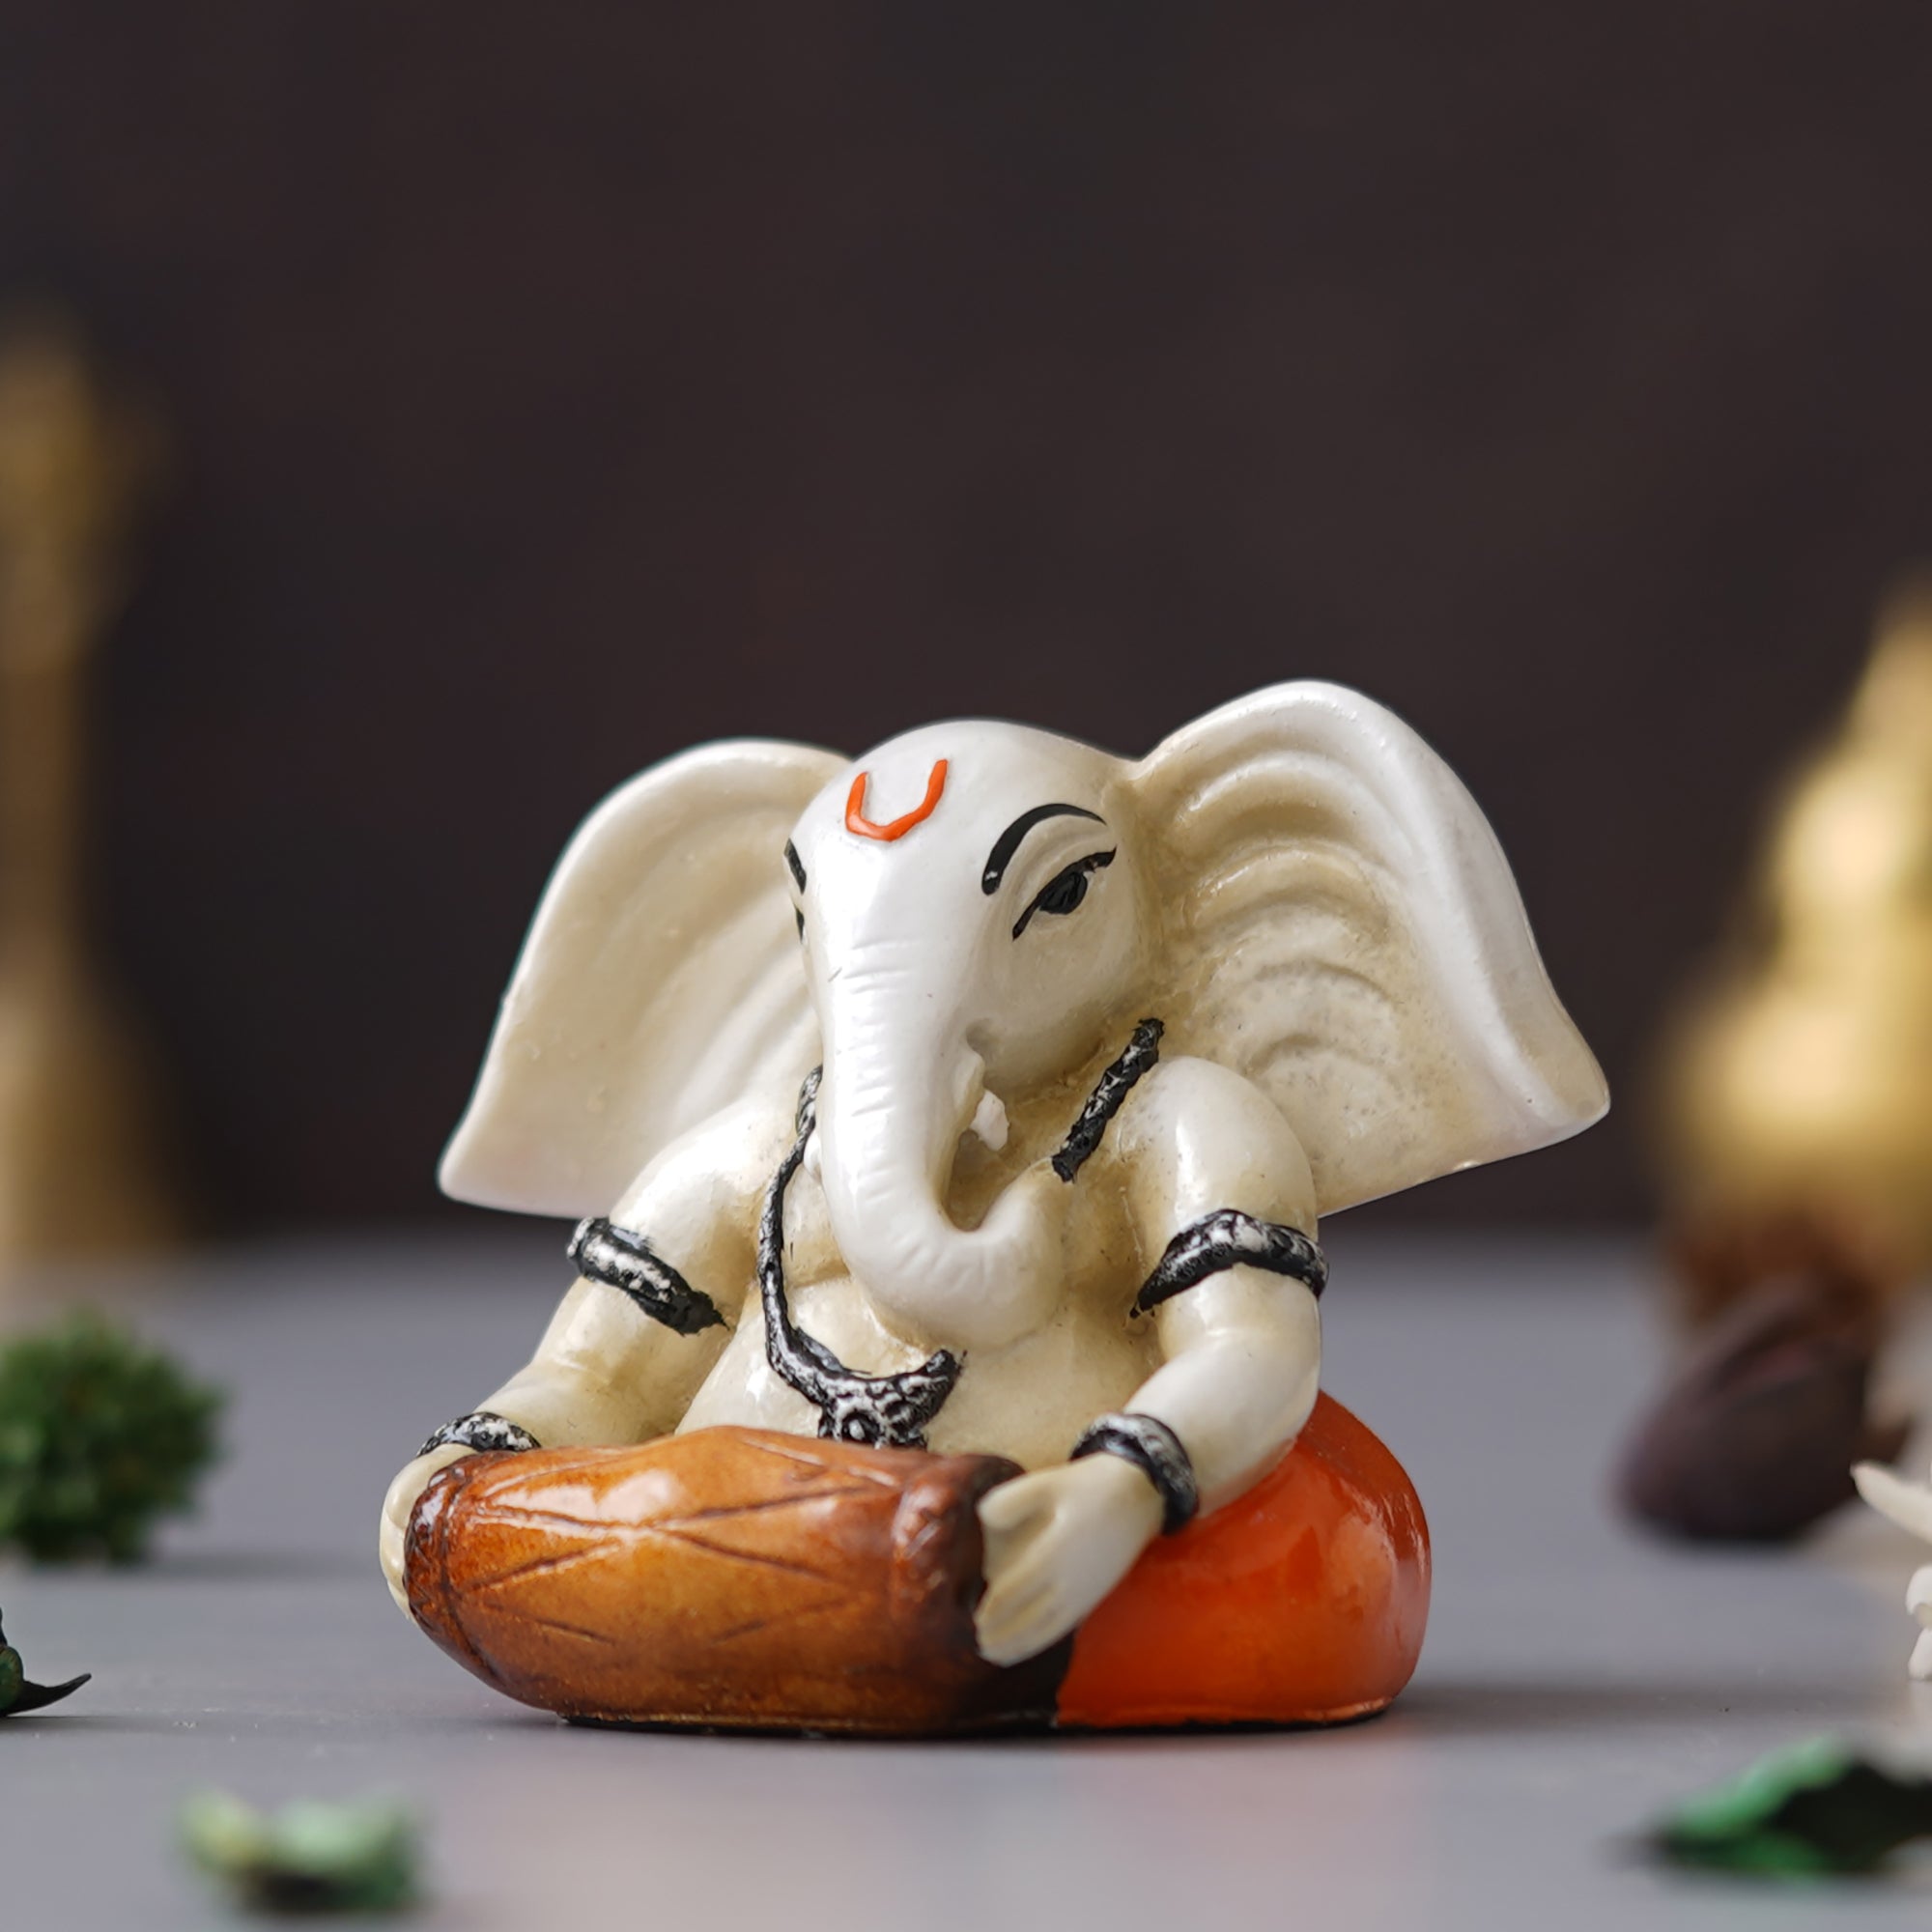 eCraftIndia White & Orange Polyresin Handcrafted Lord Ganesha Idol Playing Tabla Musical Instrument 5